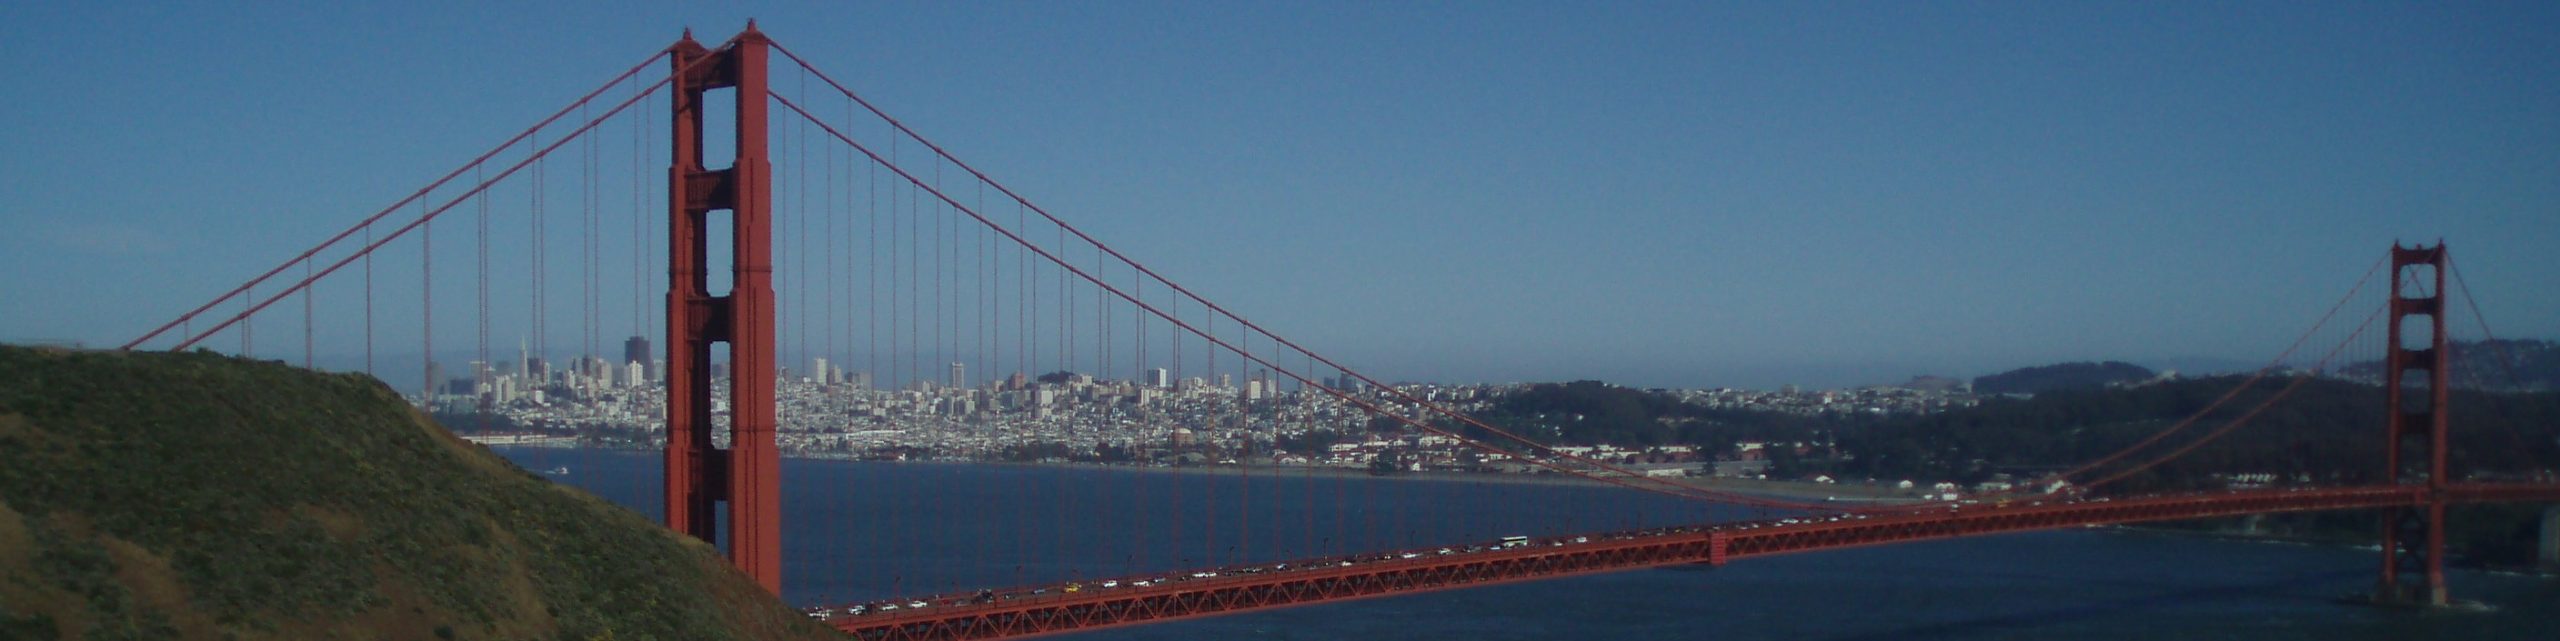 The Golden Gate Bridge, at San Francisco, California